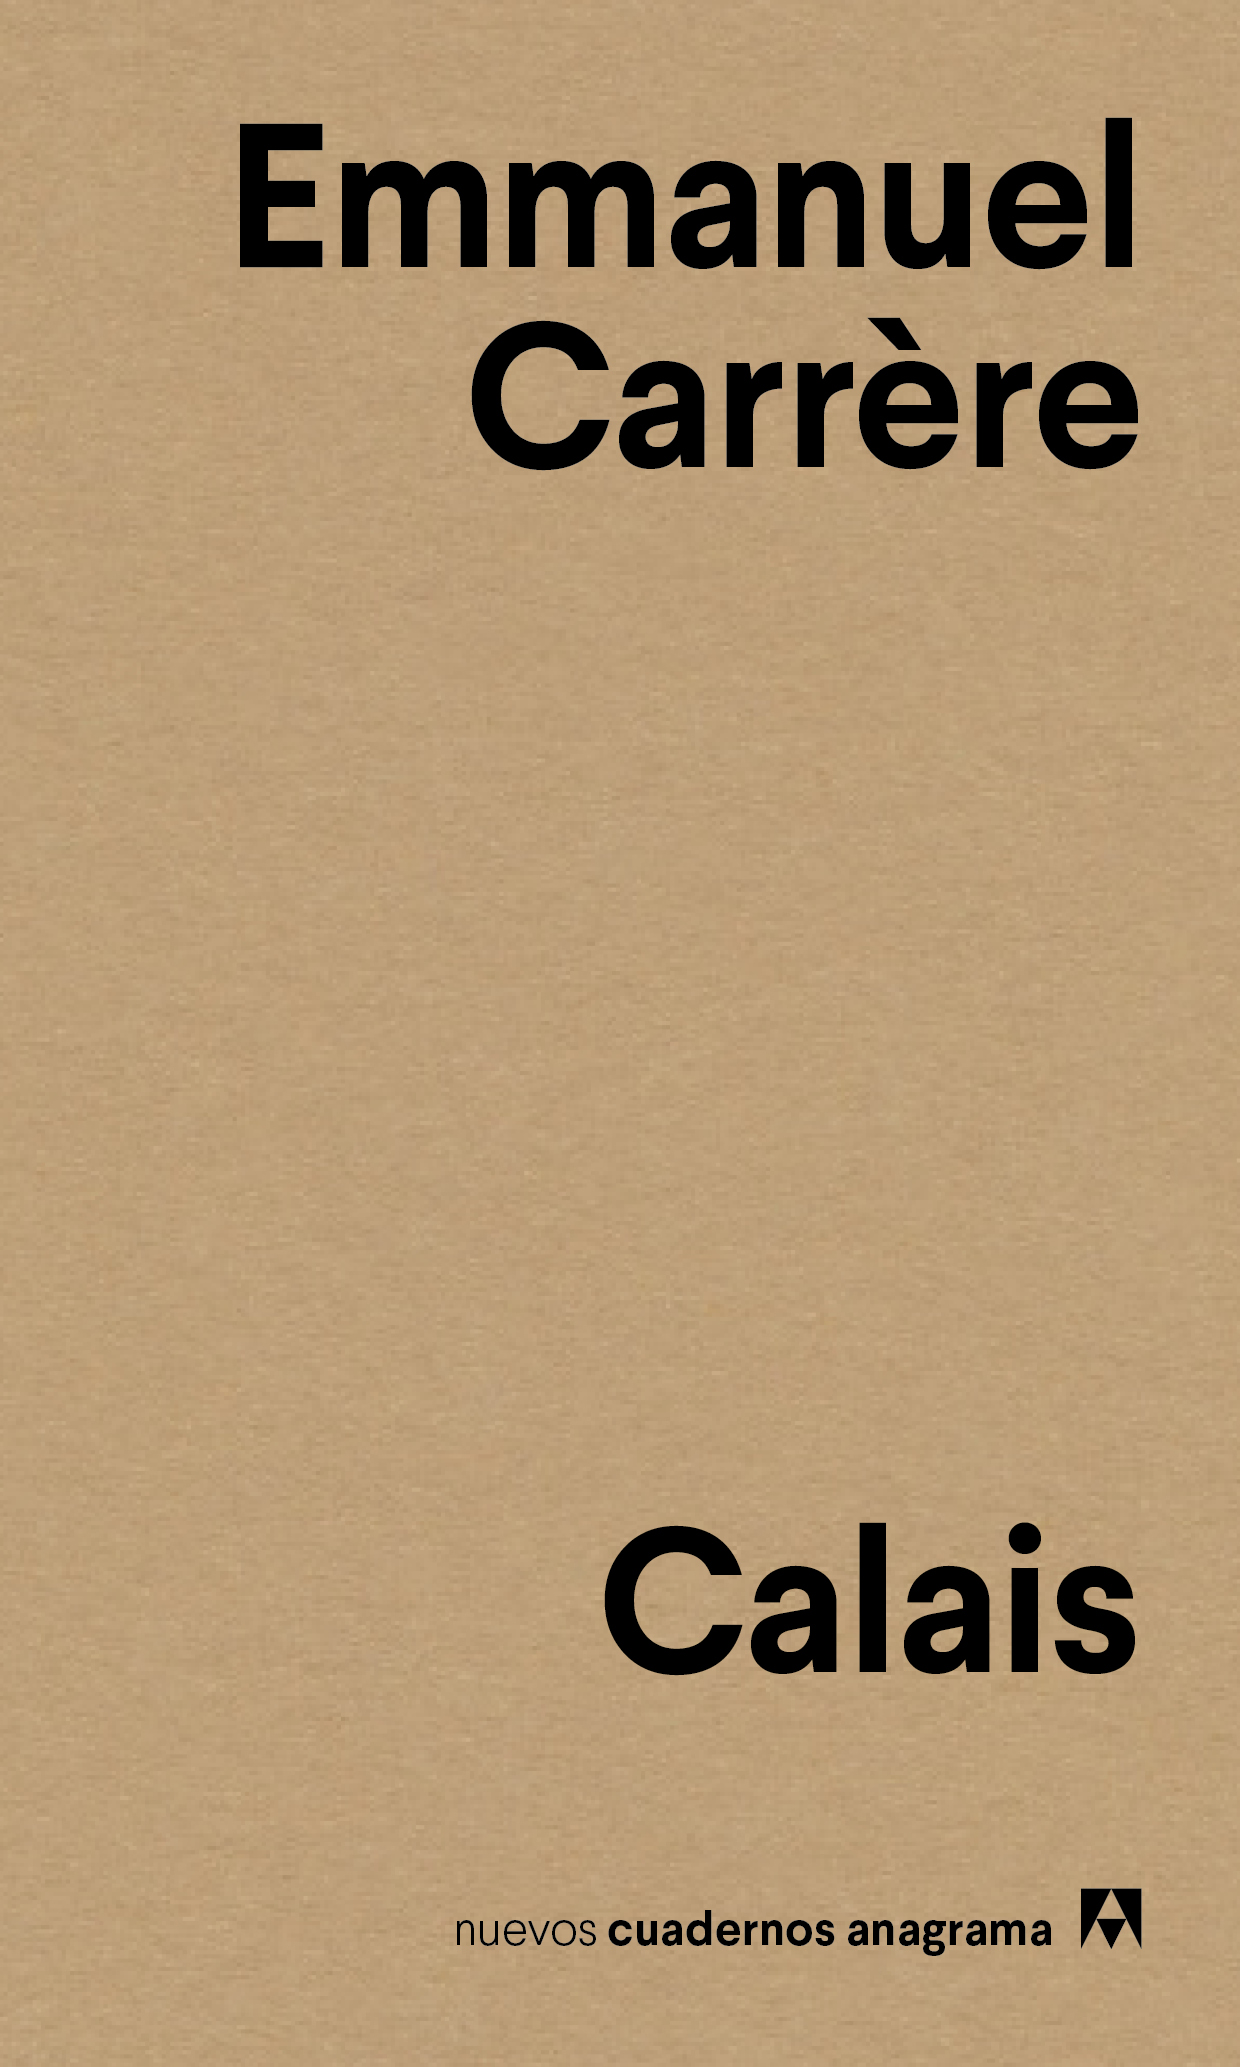 Calais - Carrère, Emmanuel - 978-84-339-1613-6 - Editorial Anagrama